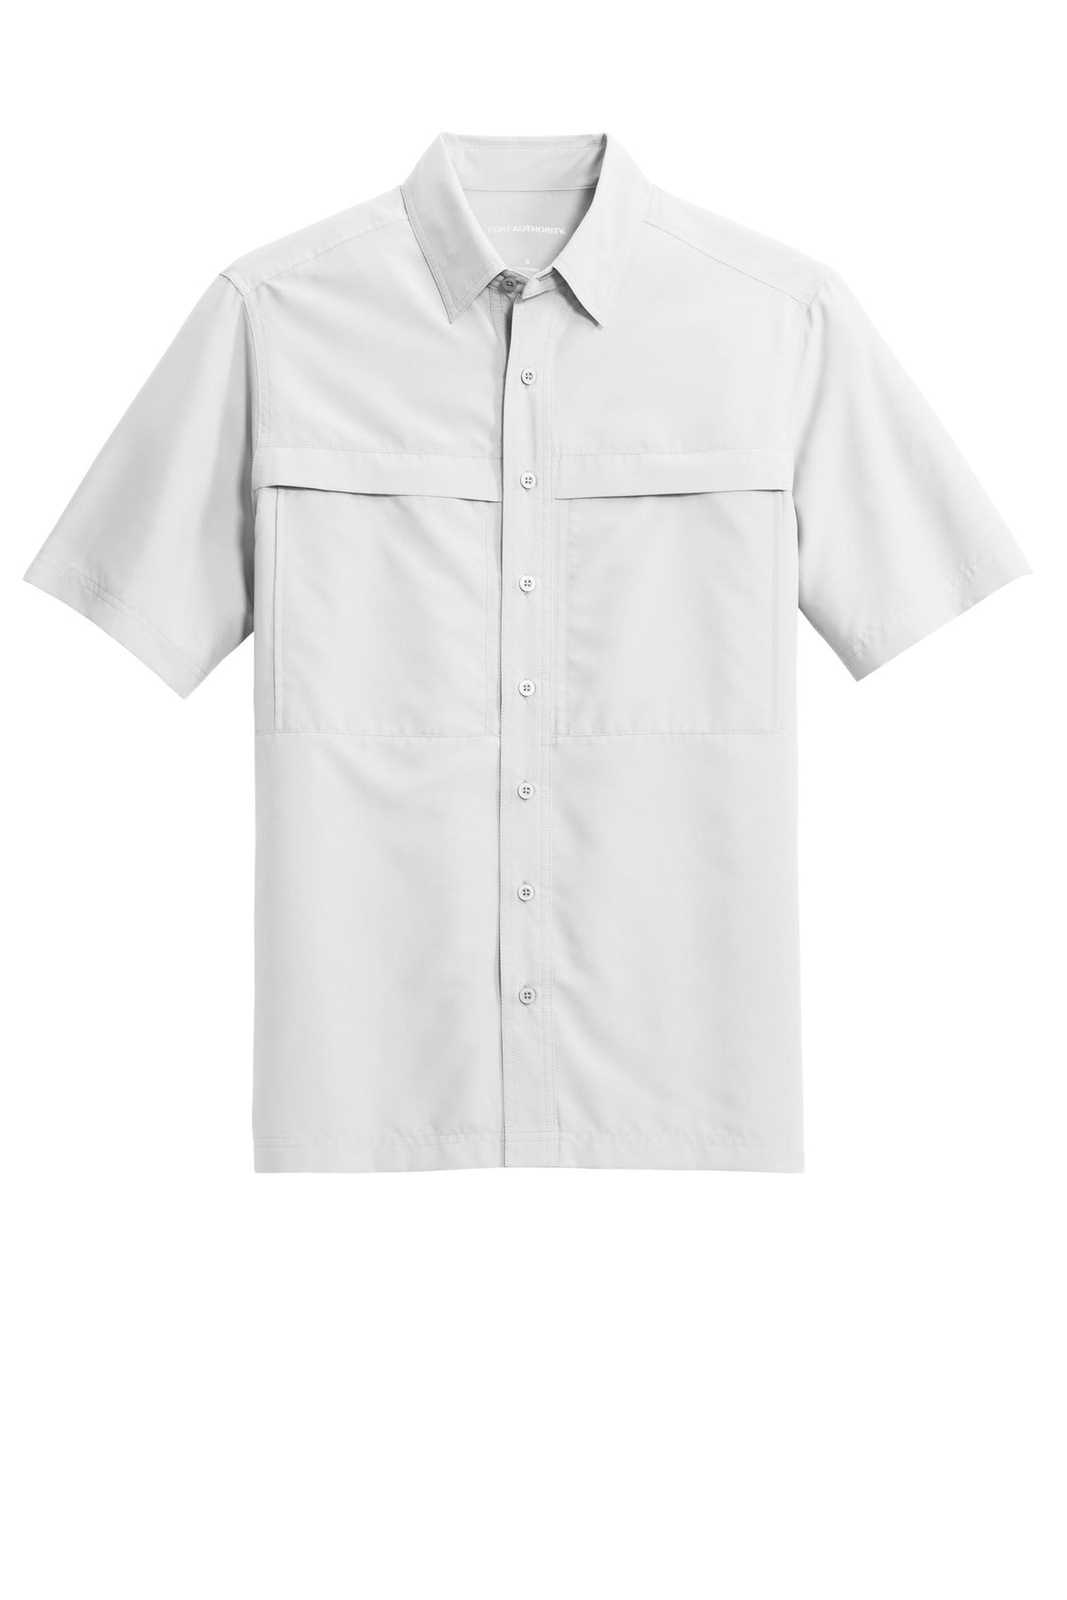 Port Authority W961 Short Sleeve UV Daybreak Shirt - White - HIT a Double - 2